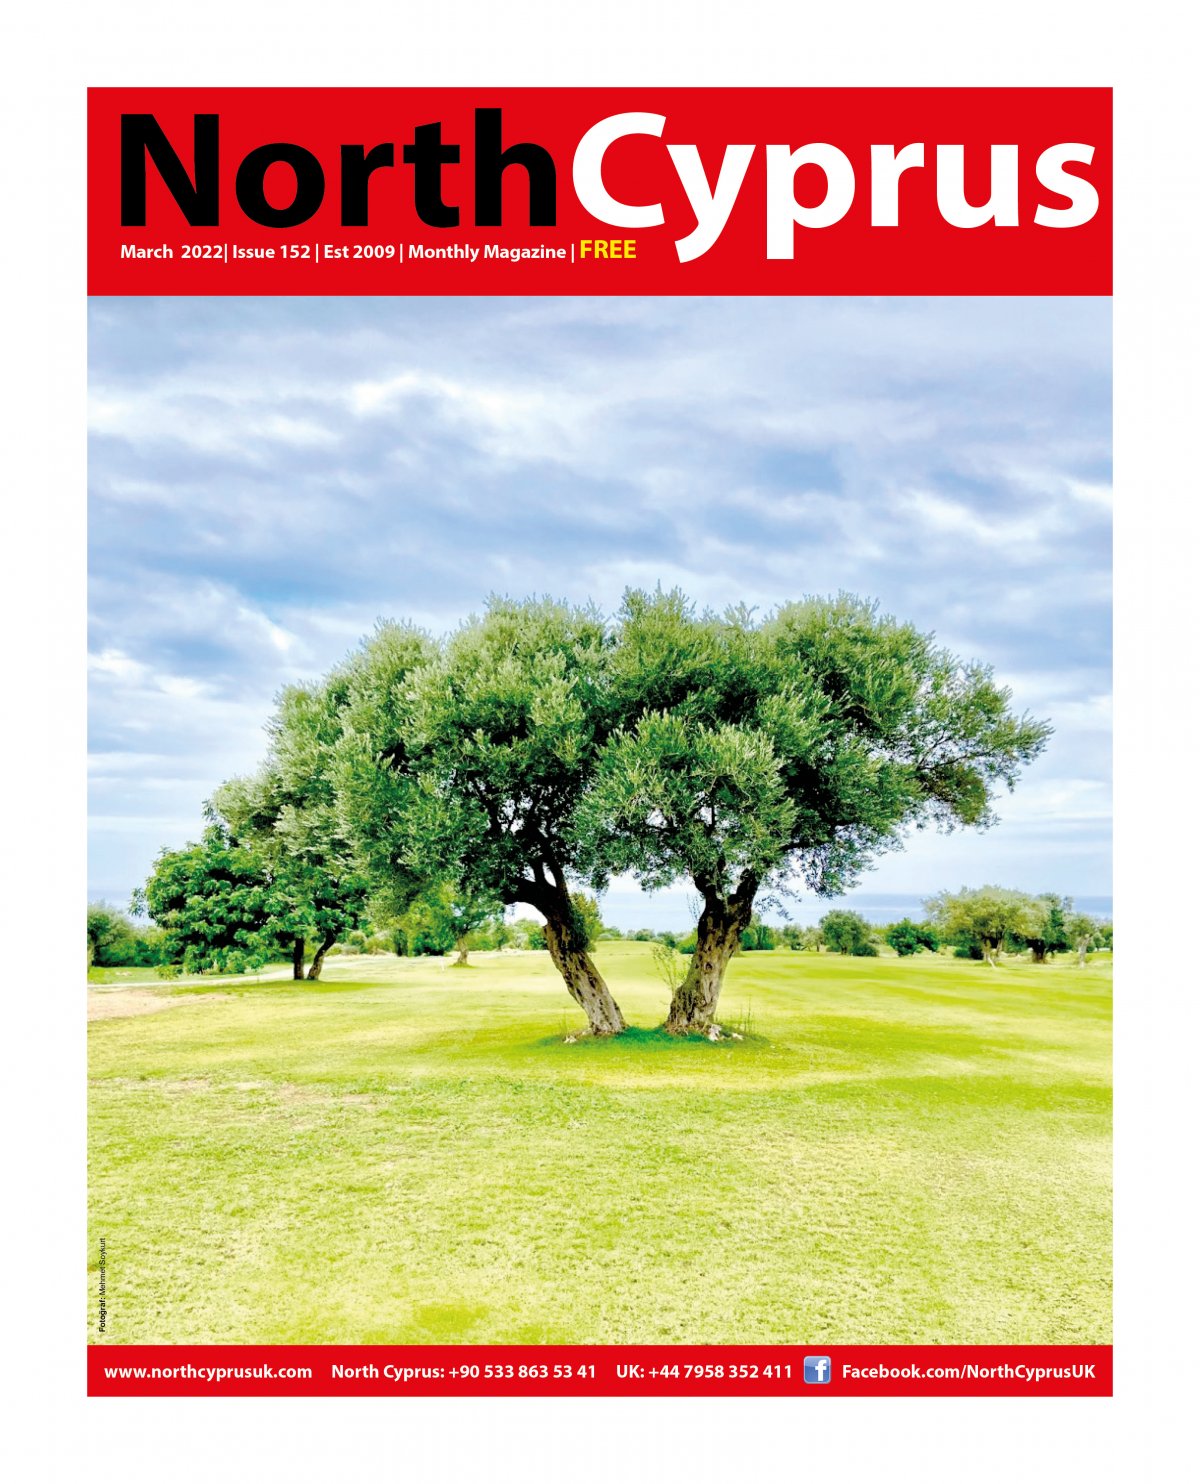 North Cyprus UK - 05.03.2022 Manşeti